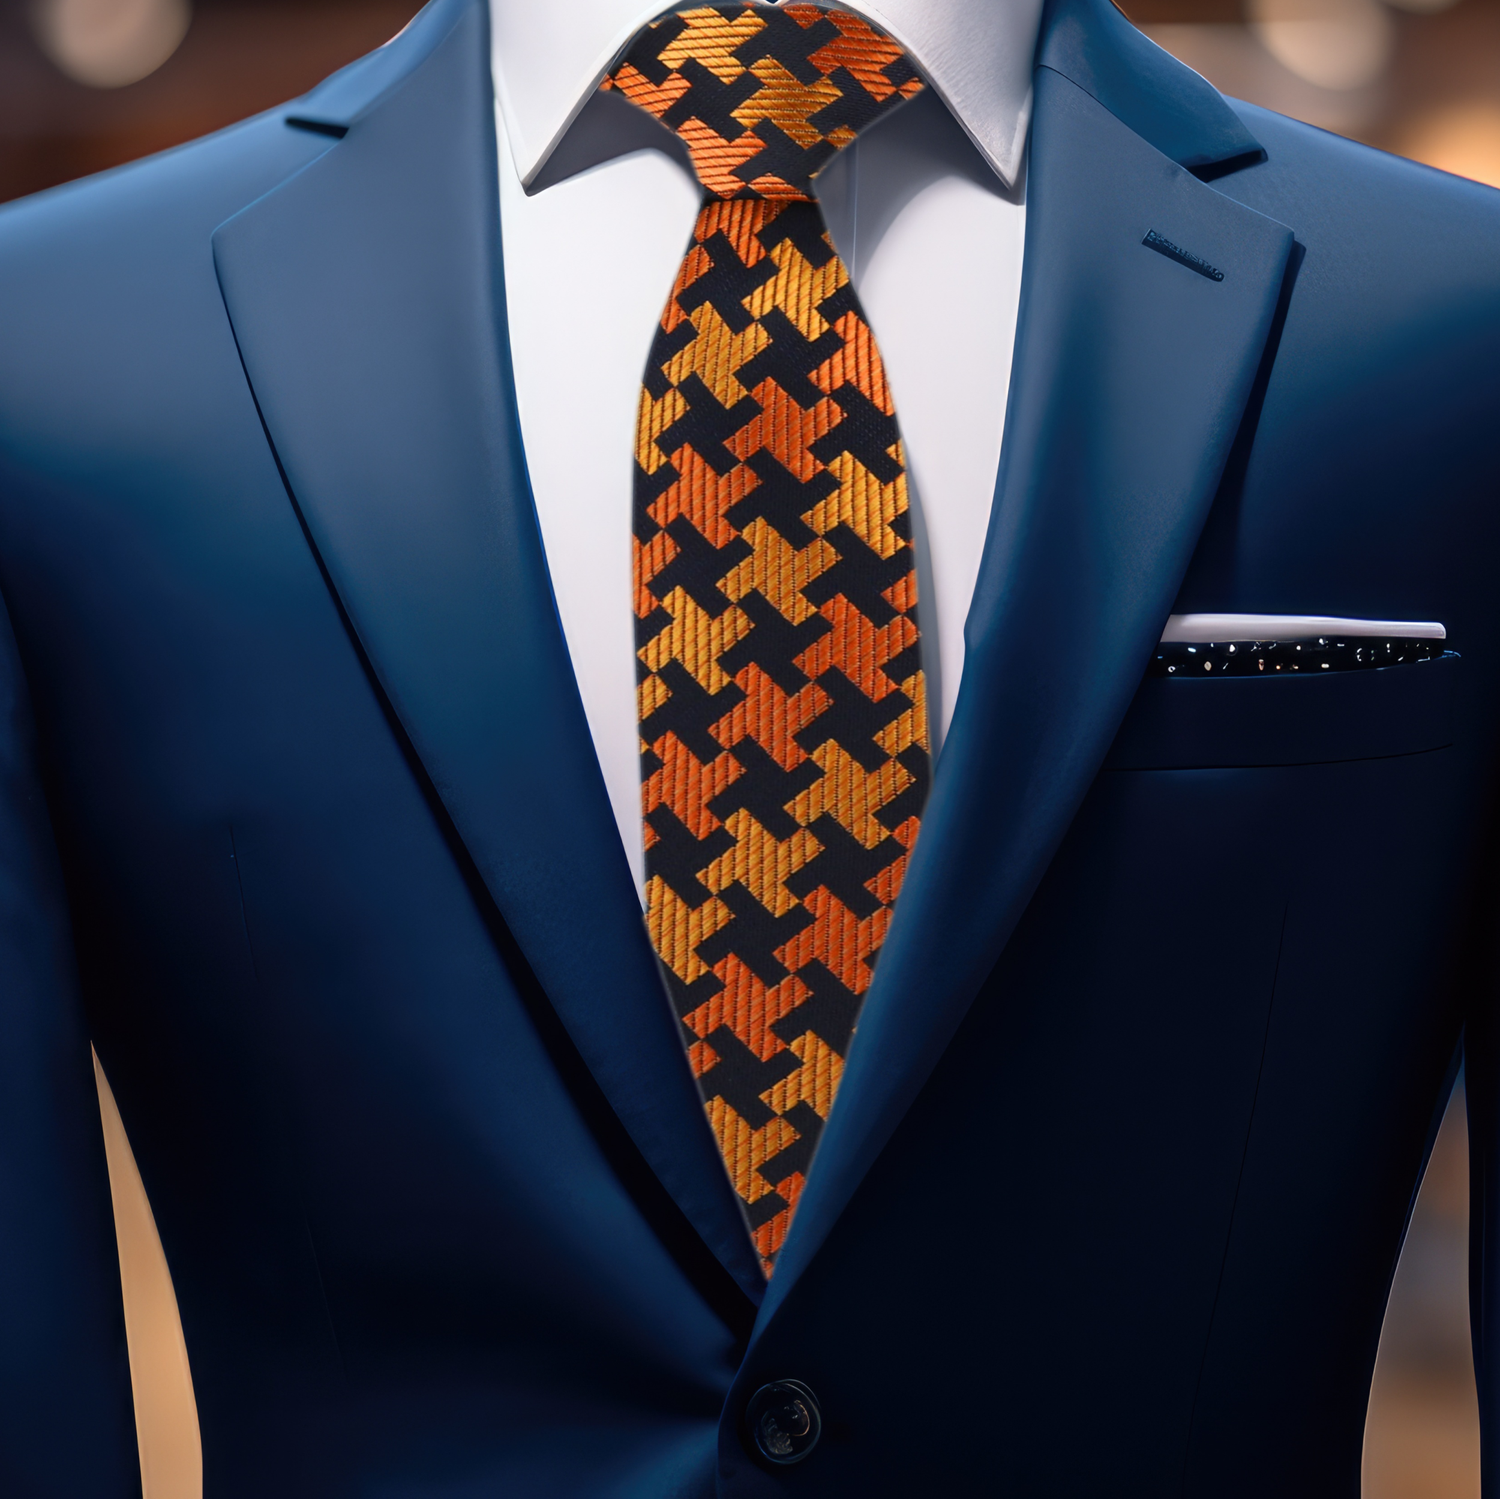 On Blue Suit: Orange, Yellow, Black Hounds Tooth Necktie